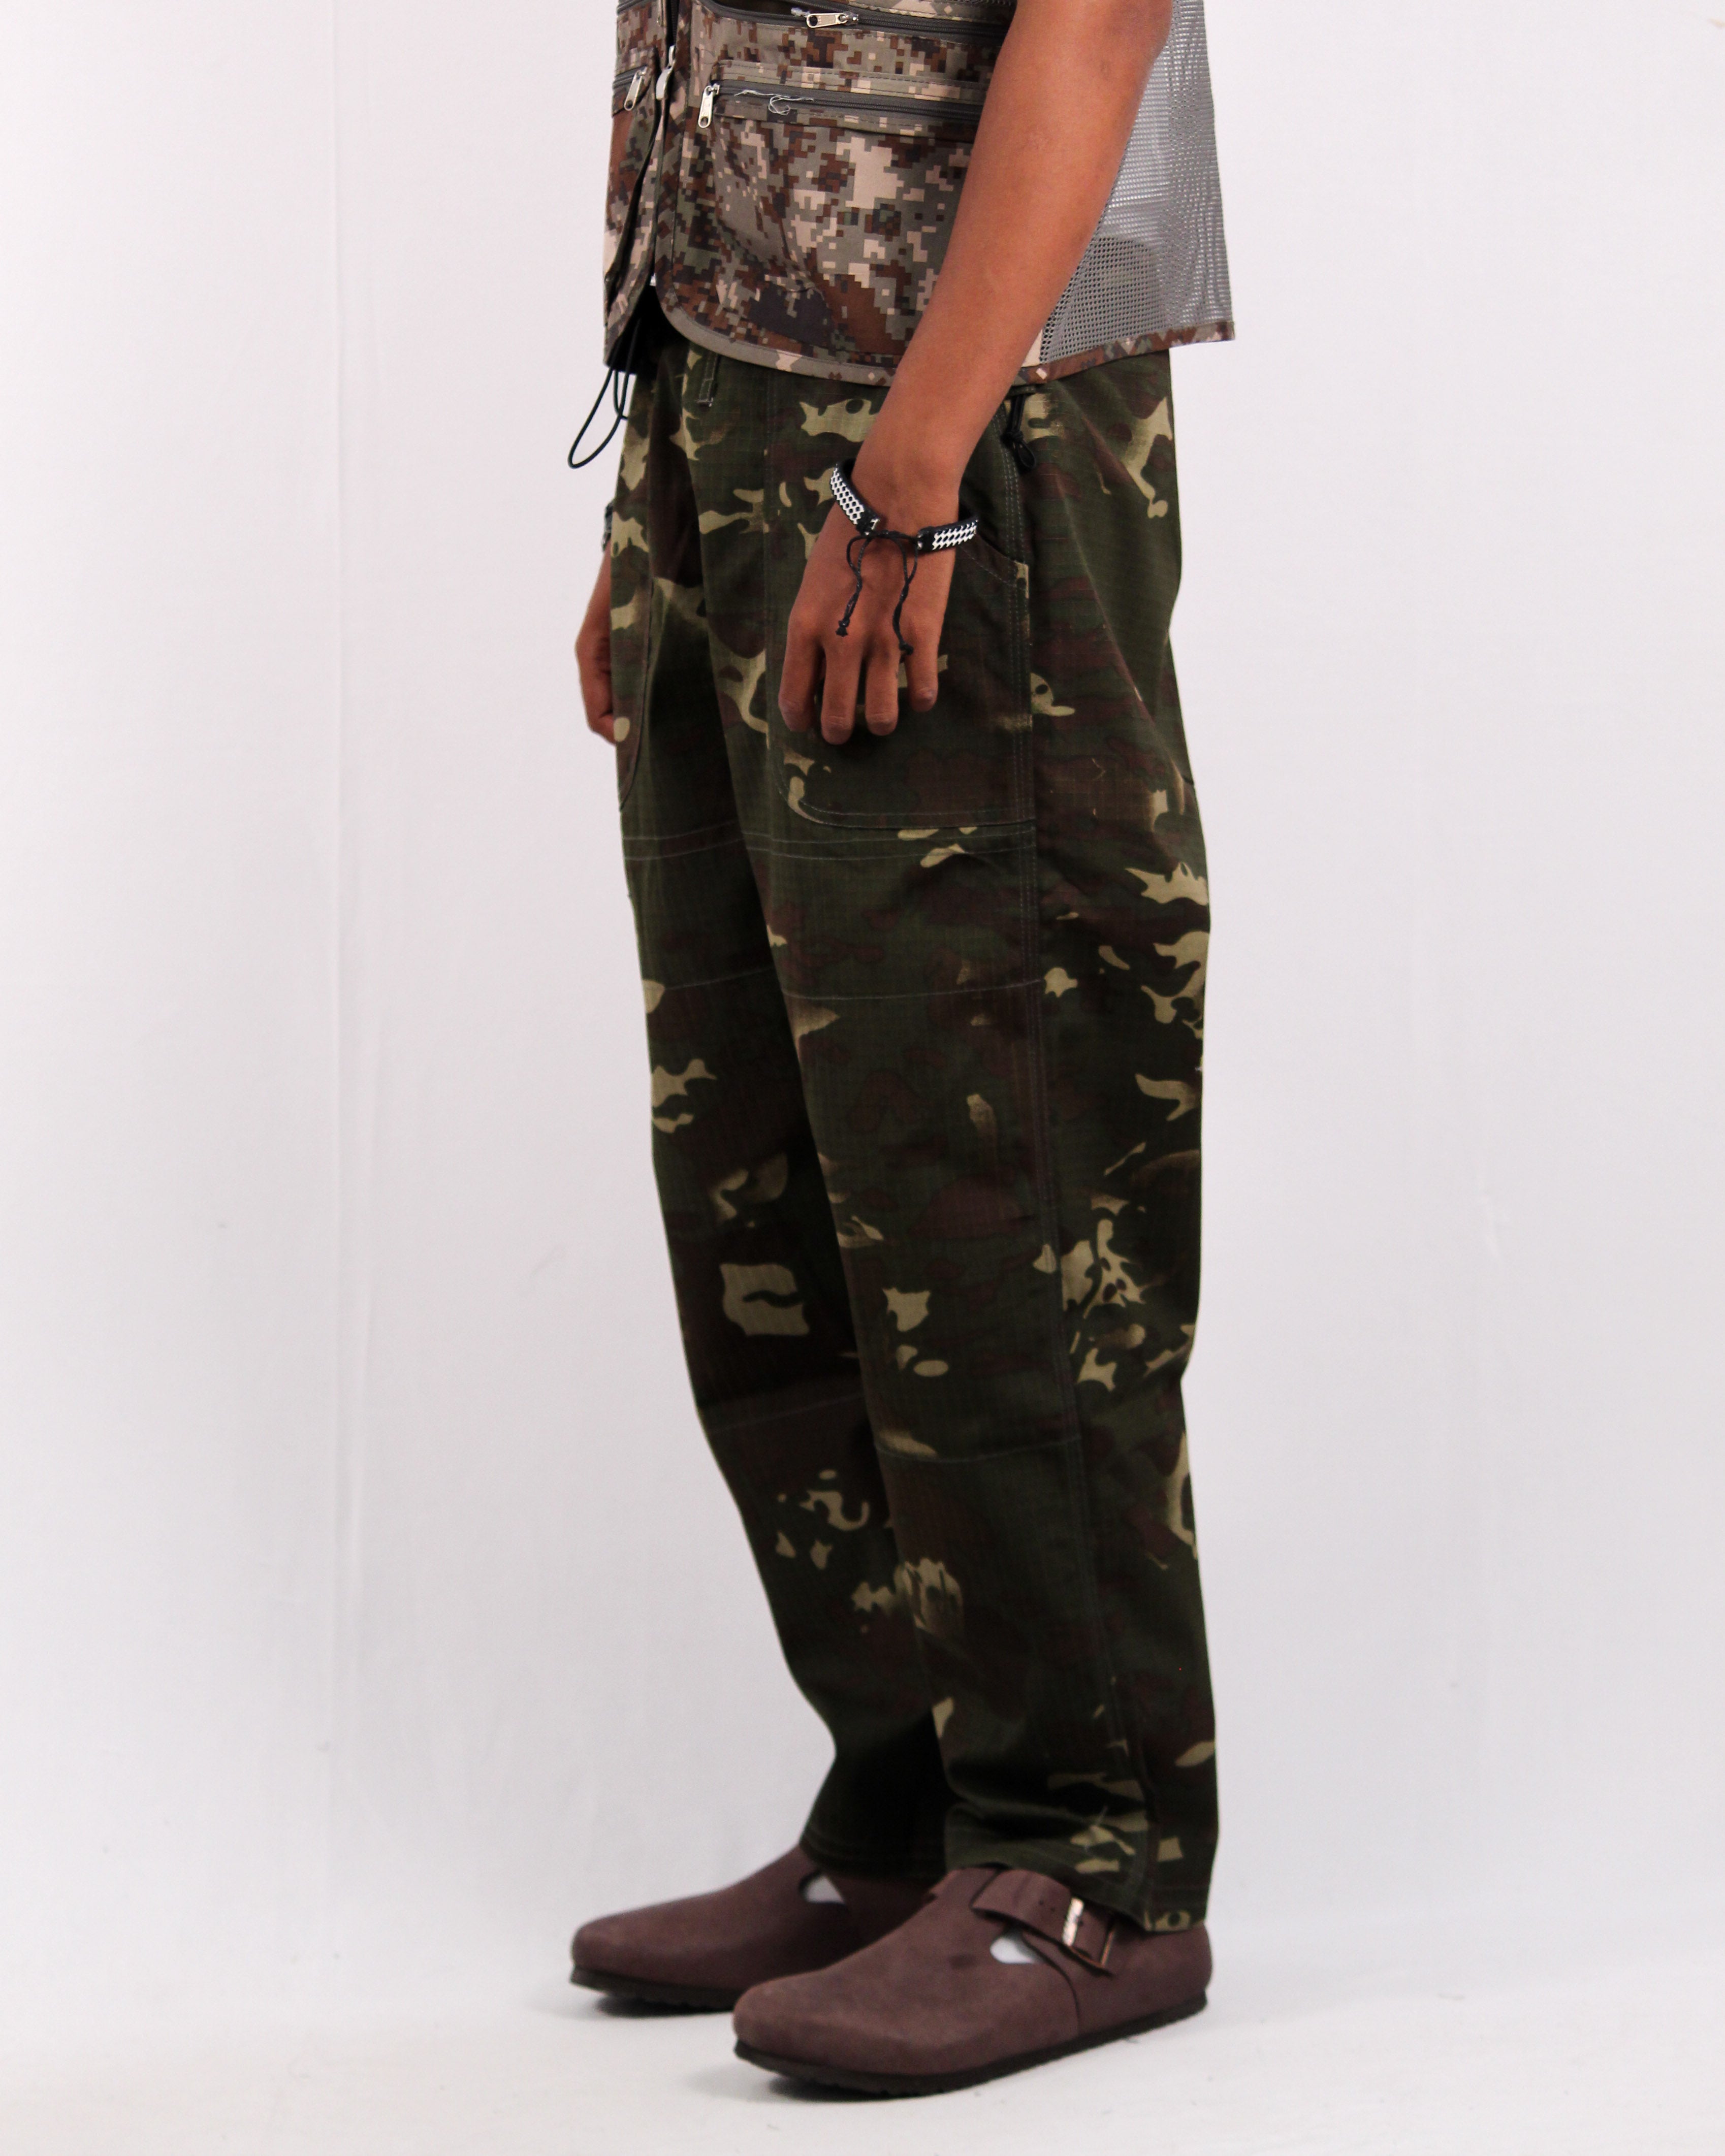 Night Desert Camo Pants, Size Small - Omahas Army Navy Surplus